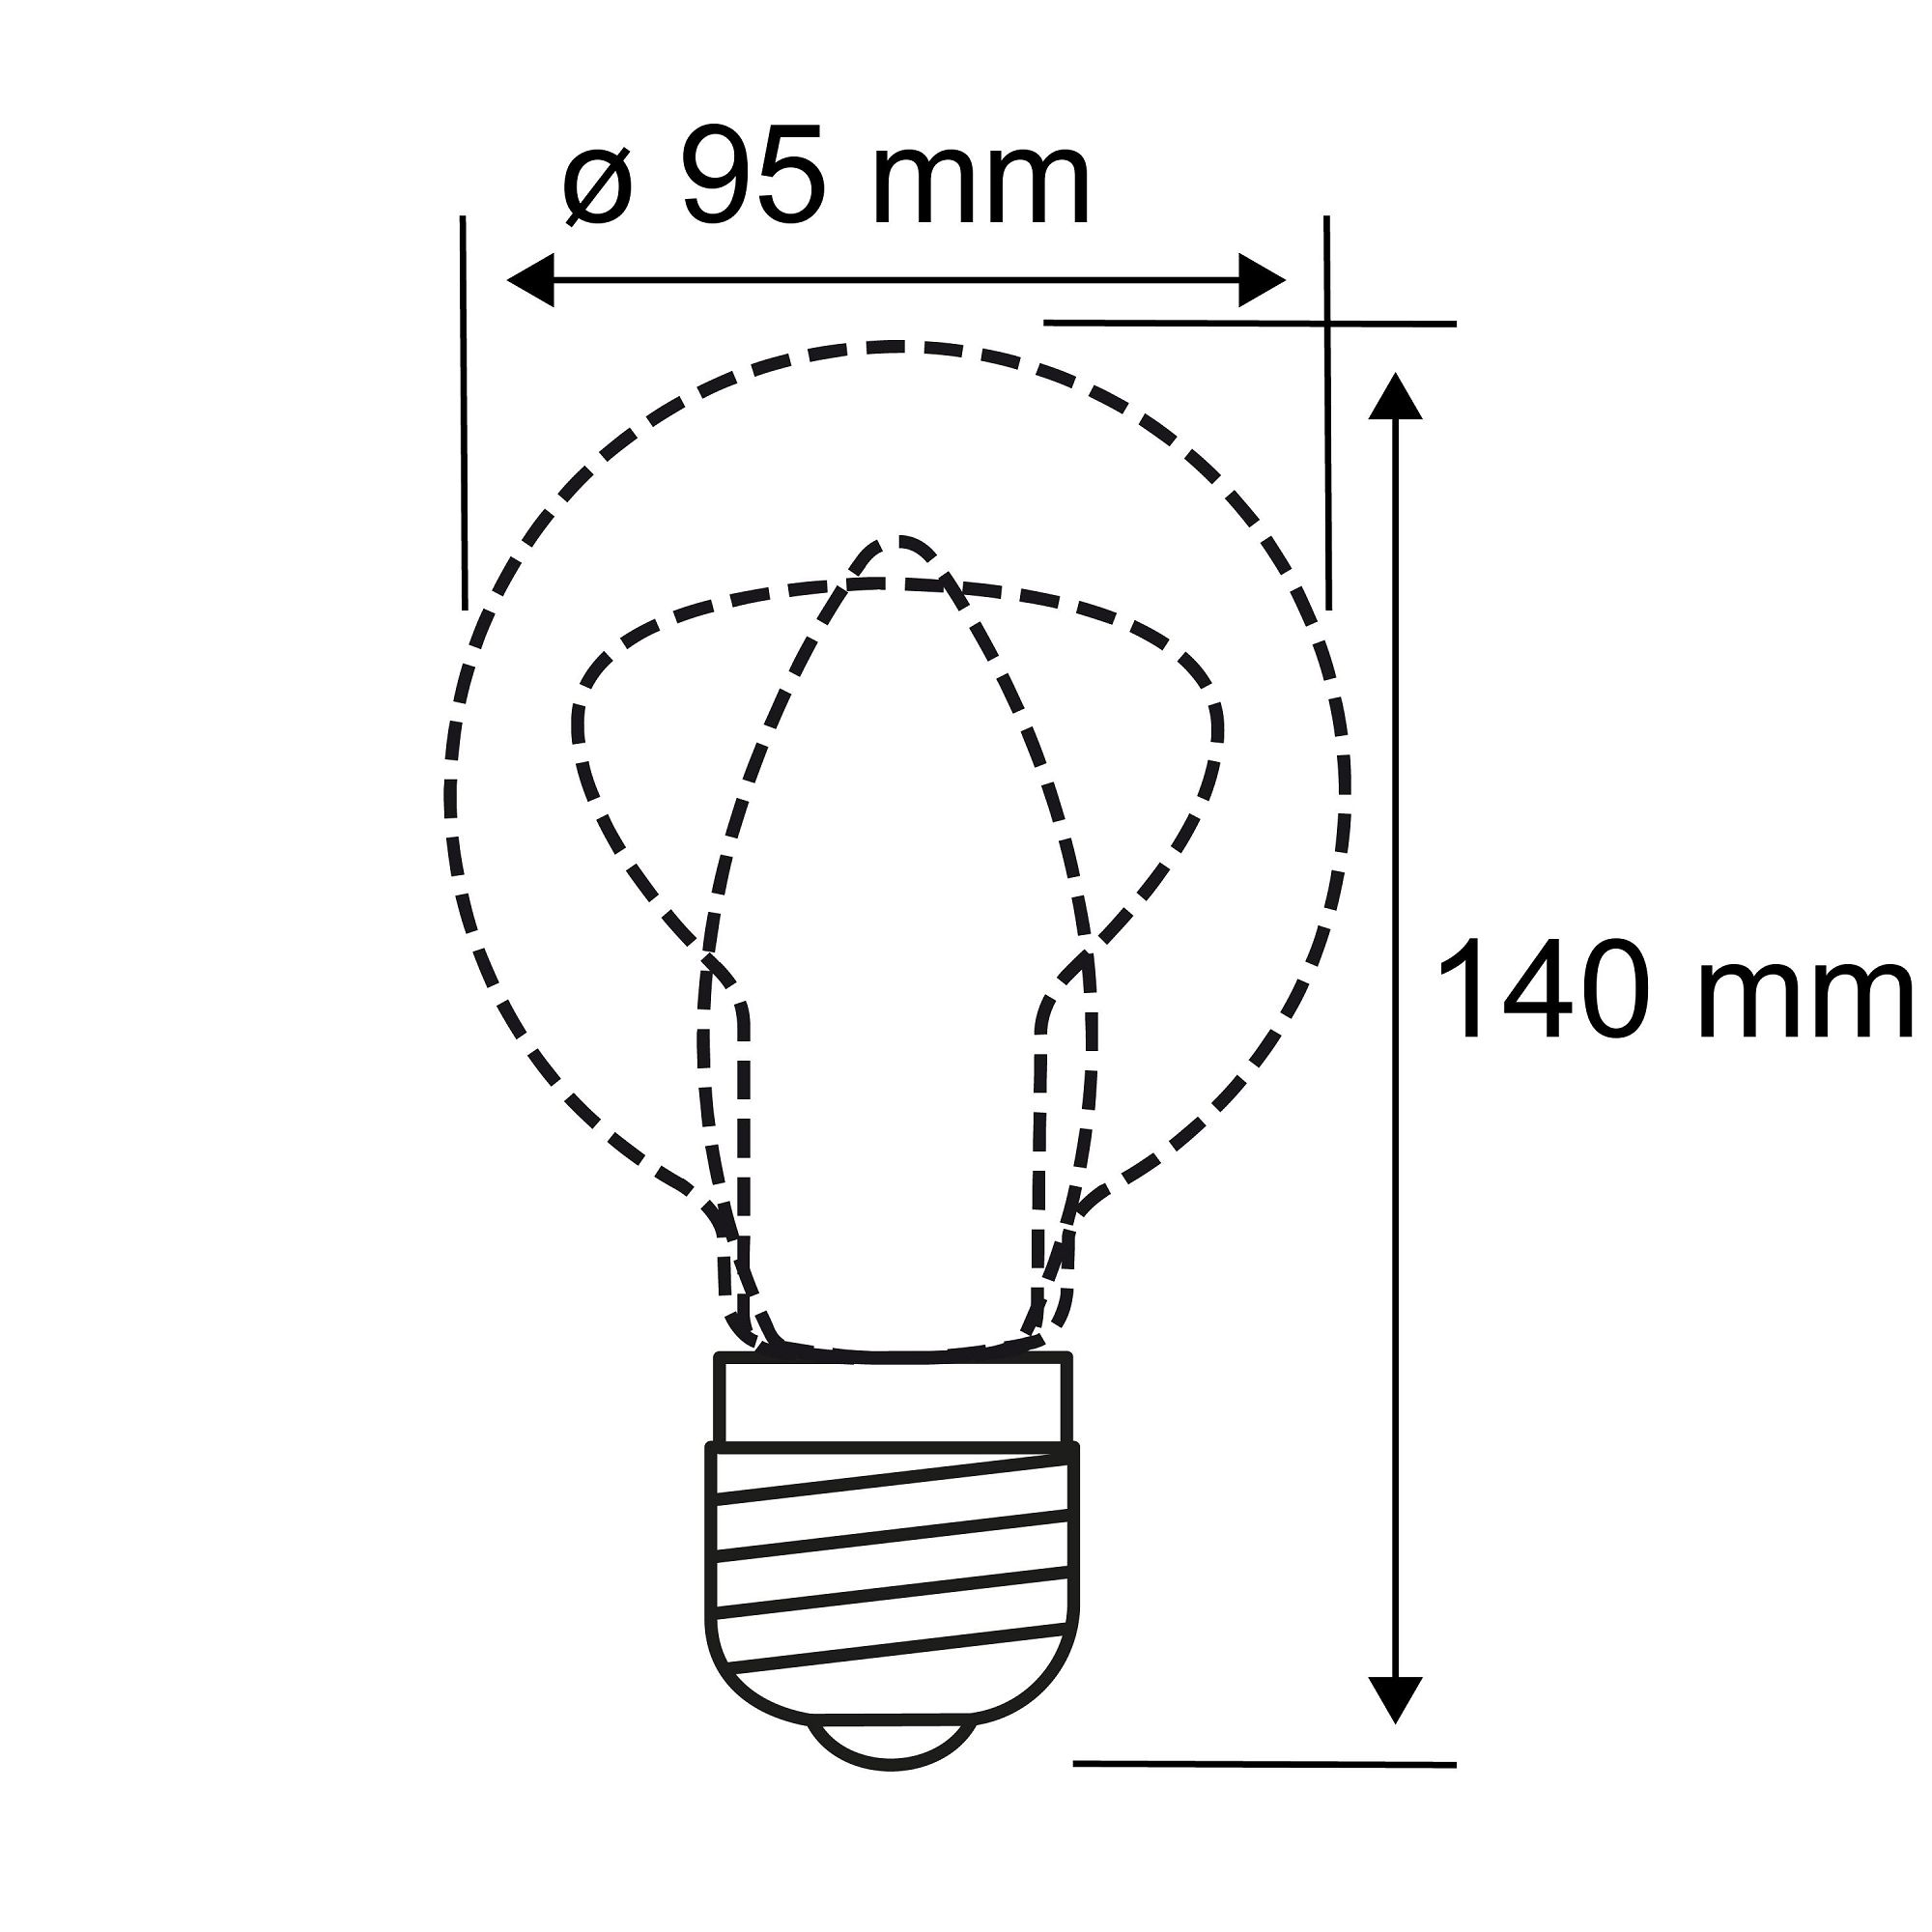 PAULMANN Chip LICHT LED Globe Warmweiß (28970) LED